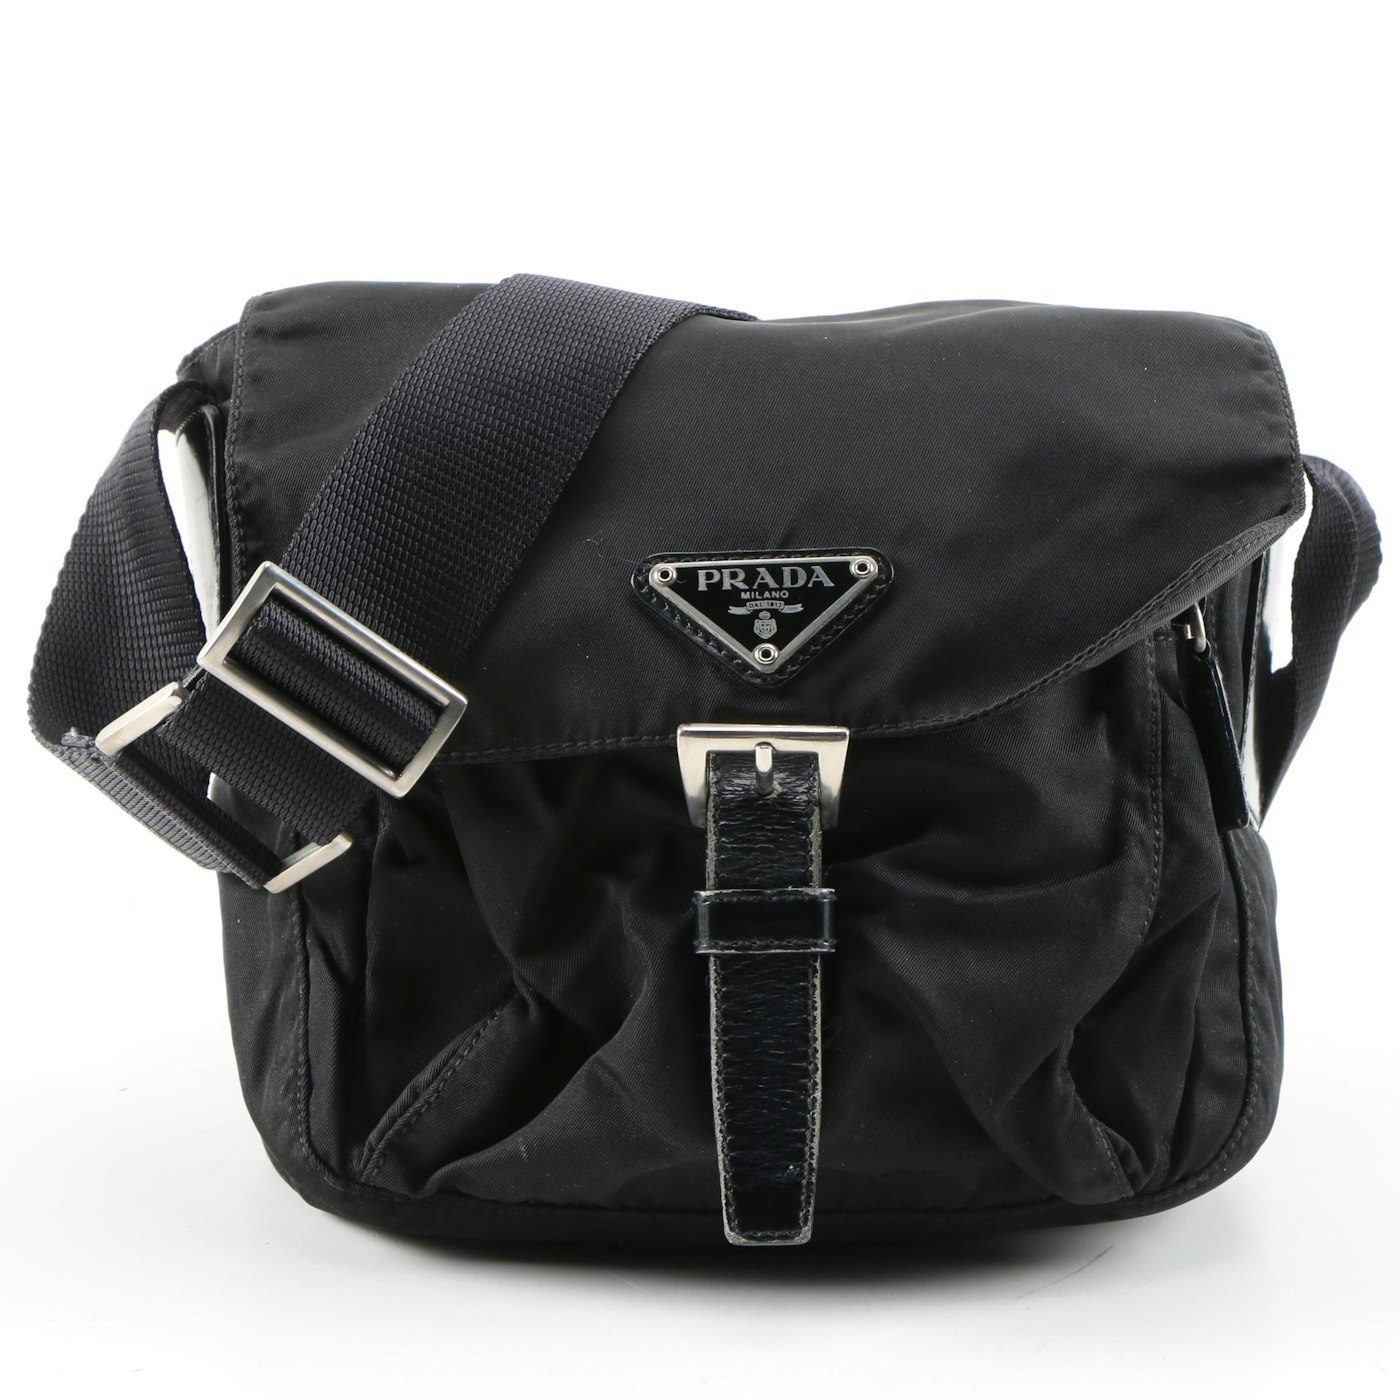 Prada Small Crossbody Bag in Black Tessuto Nylon and Leather | EBTH